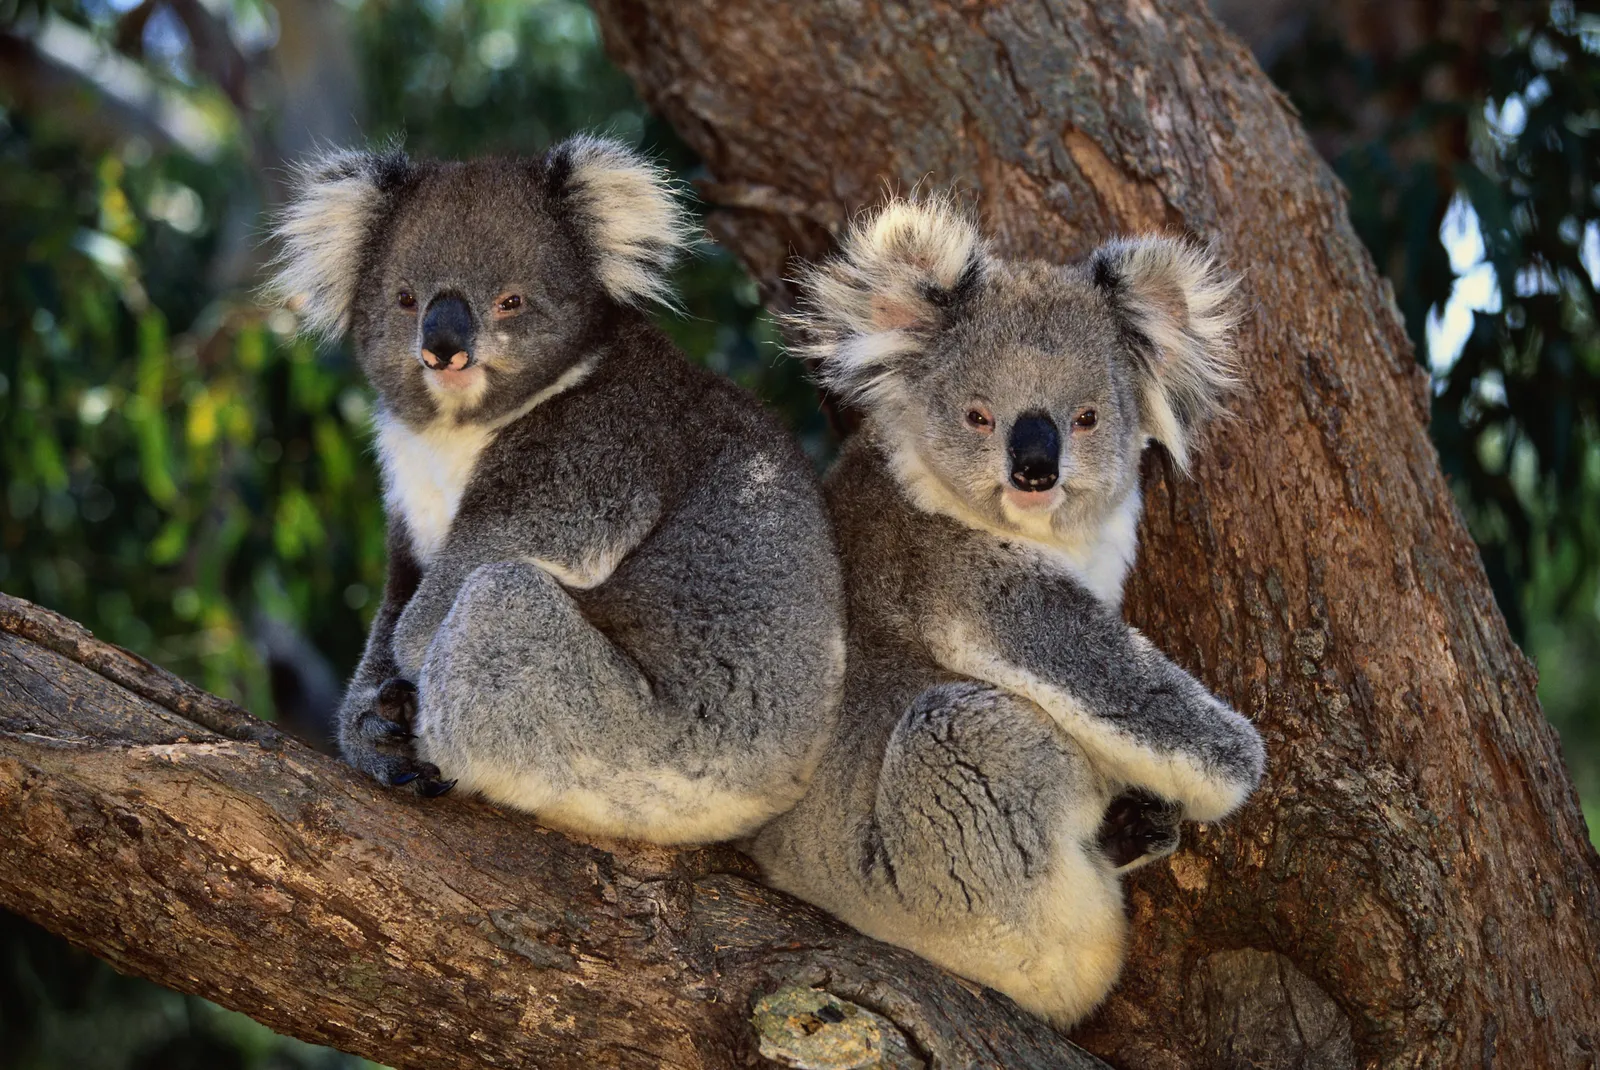 Scientists Begin Vaccinating Wild Koalas Against Chlamydia, Smart News